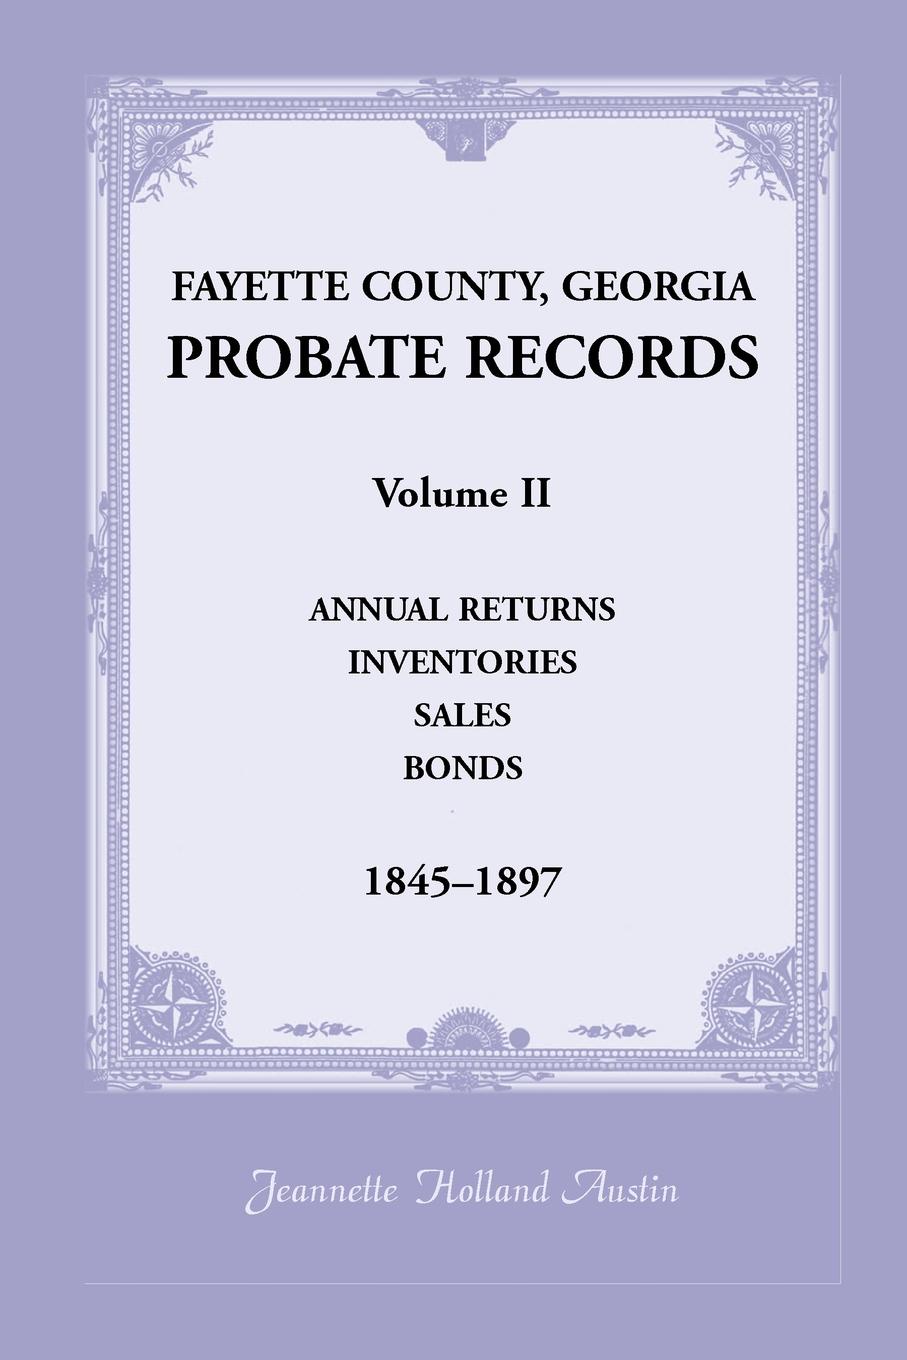 Fayette County, Georgia Probate Records. Volume II, Annual Returns, Inventories, Sales, Bonds, 1845-1897